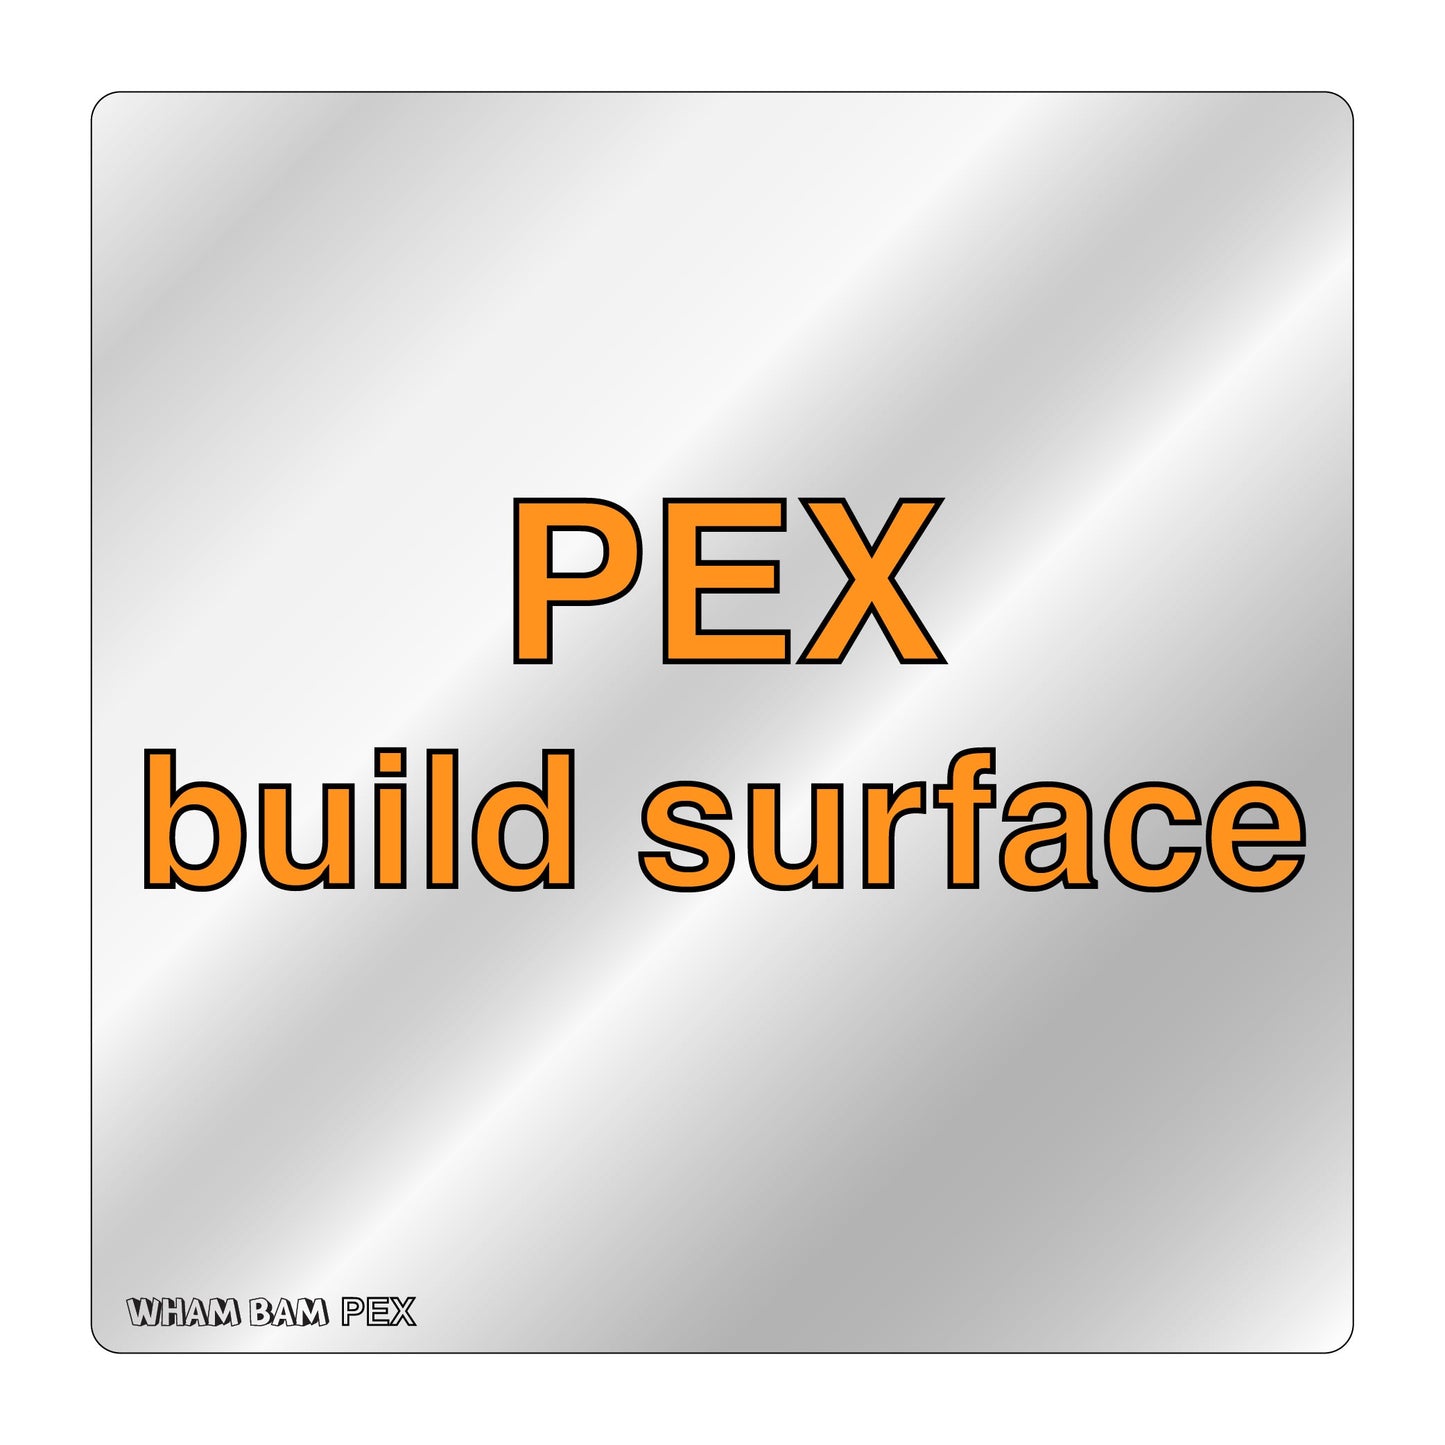 PEX Build Surface - 254 x 254 - Voron 2.4 250 and Tronxy XY-2 Pro